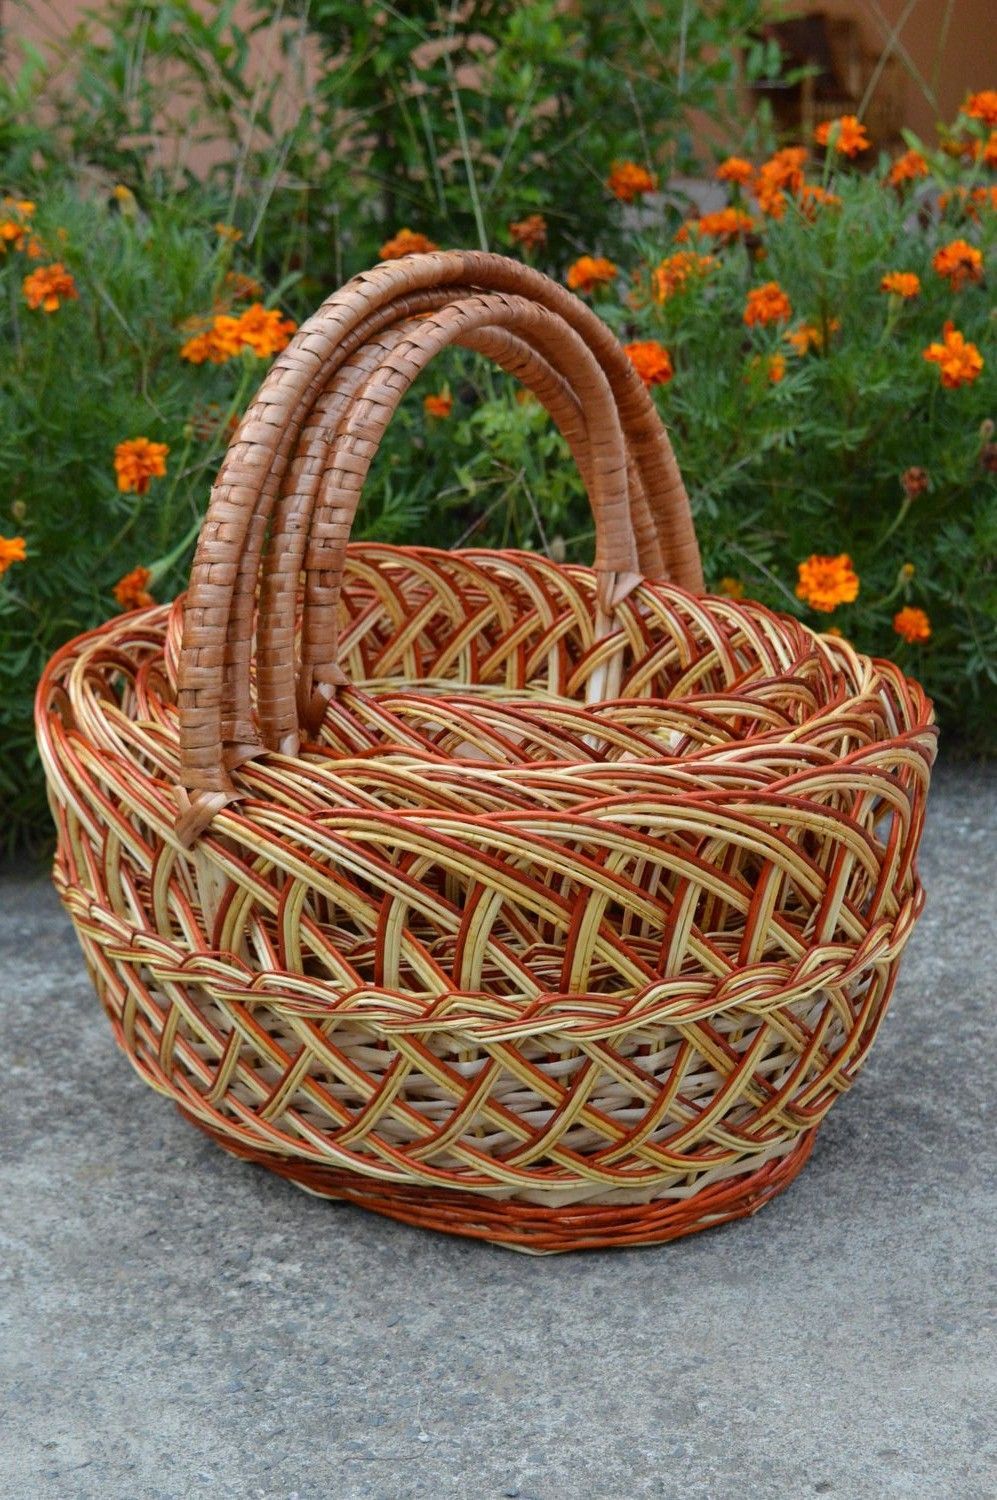 BUY Handmade cute designer baskets woven decorative elements 4 present